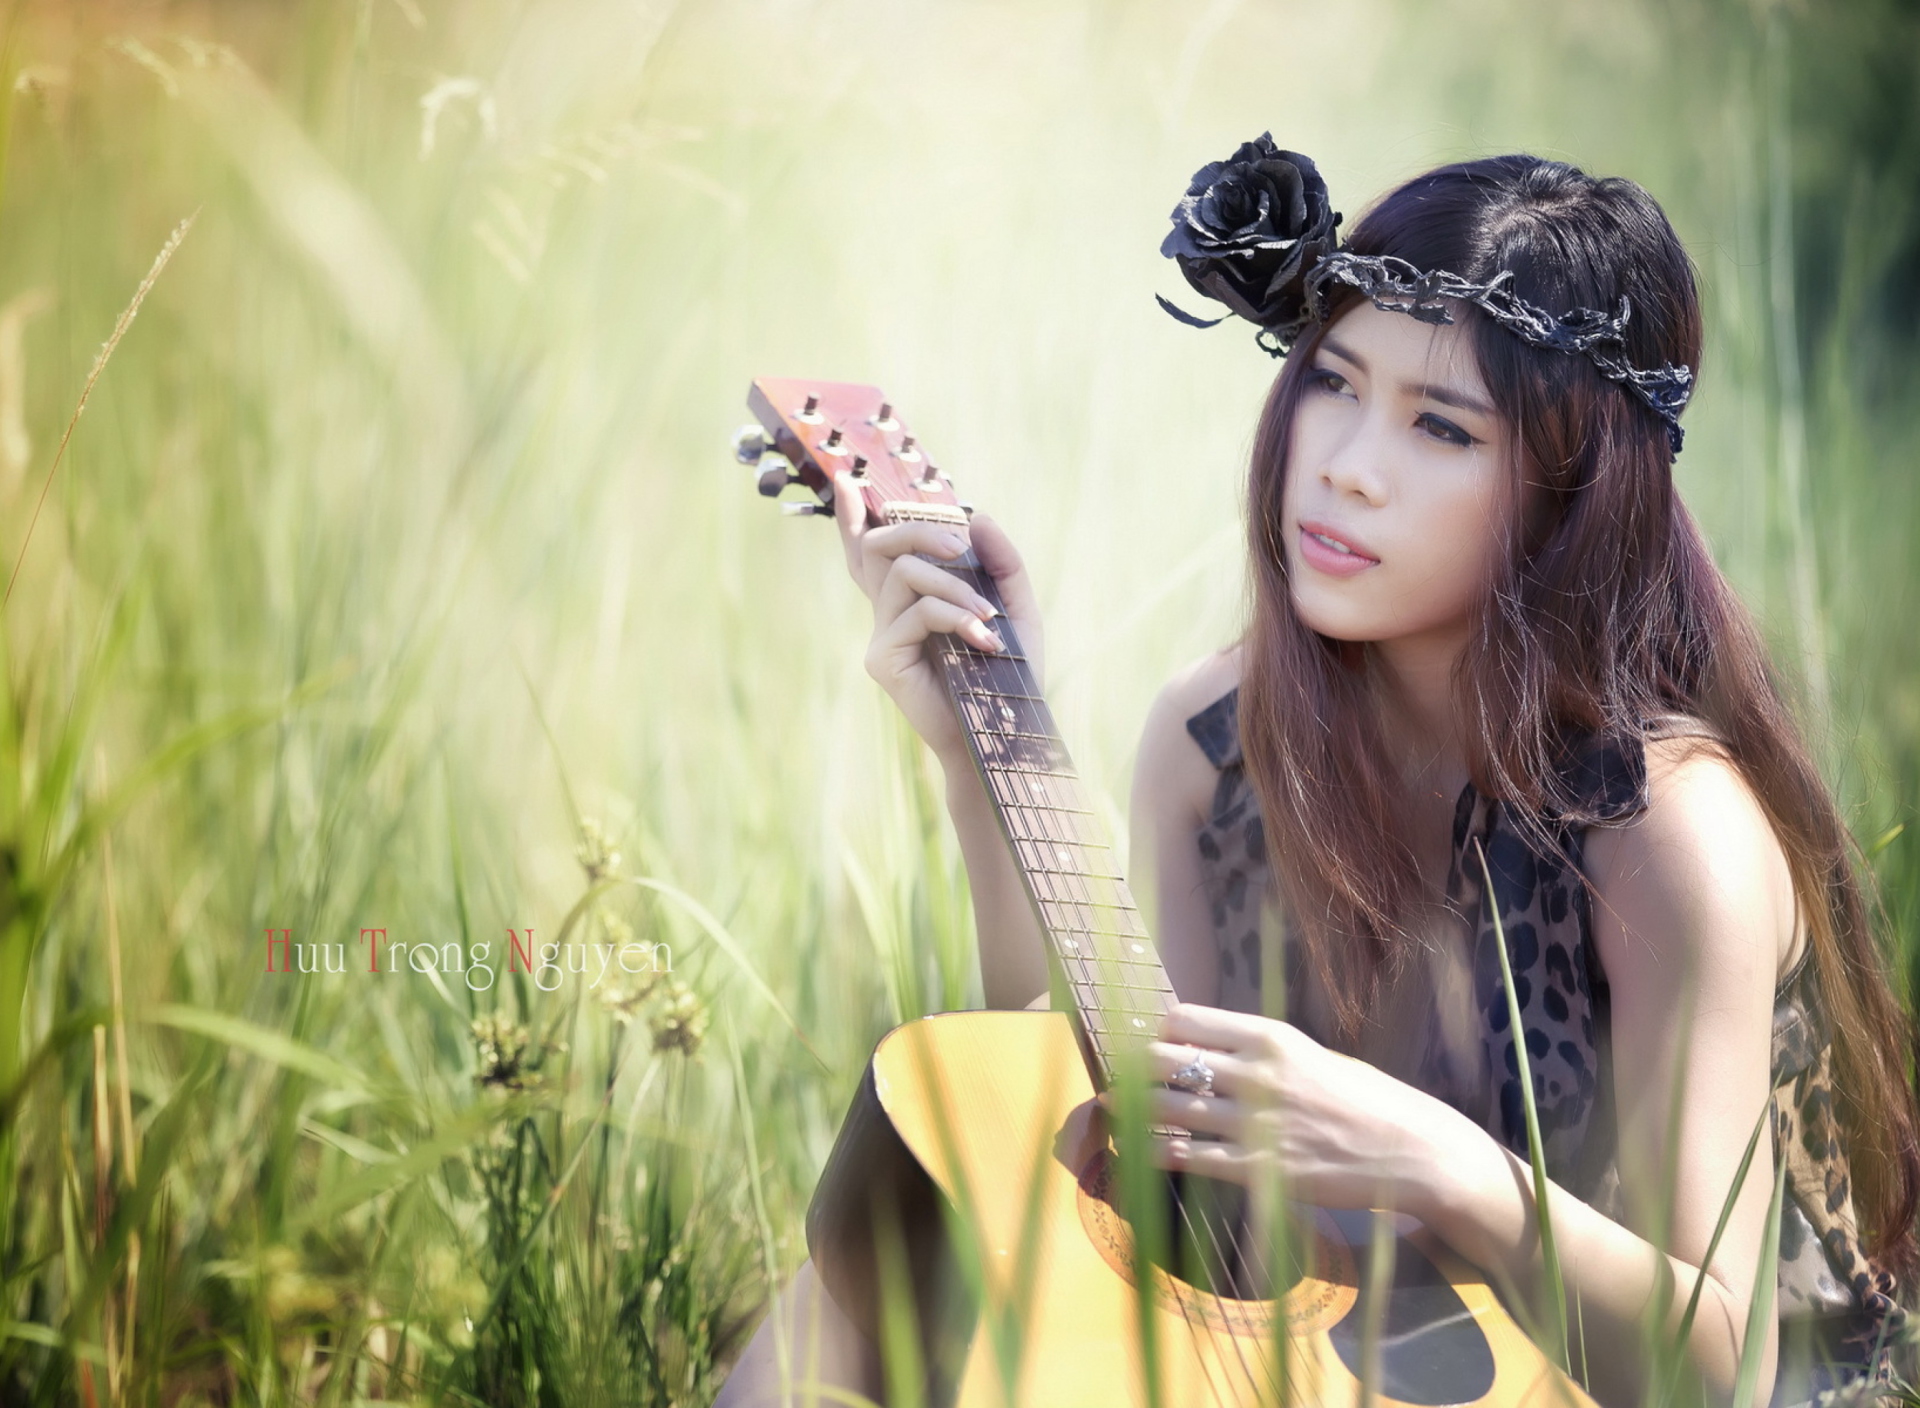 Pretty Girl In Grass Playing Guitar wallpaper 1920x1408